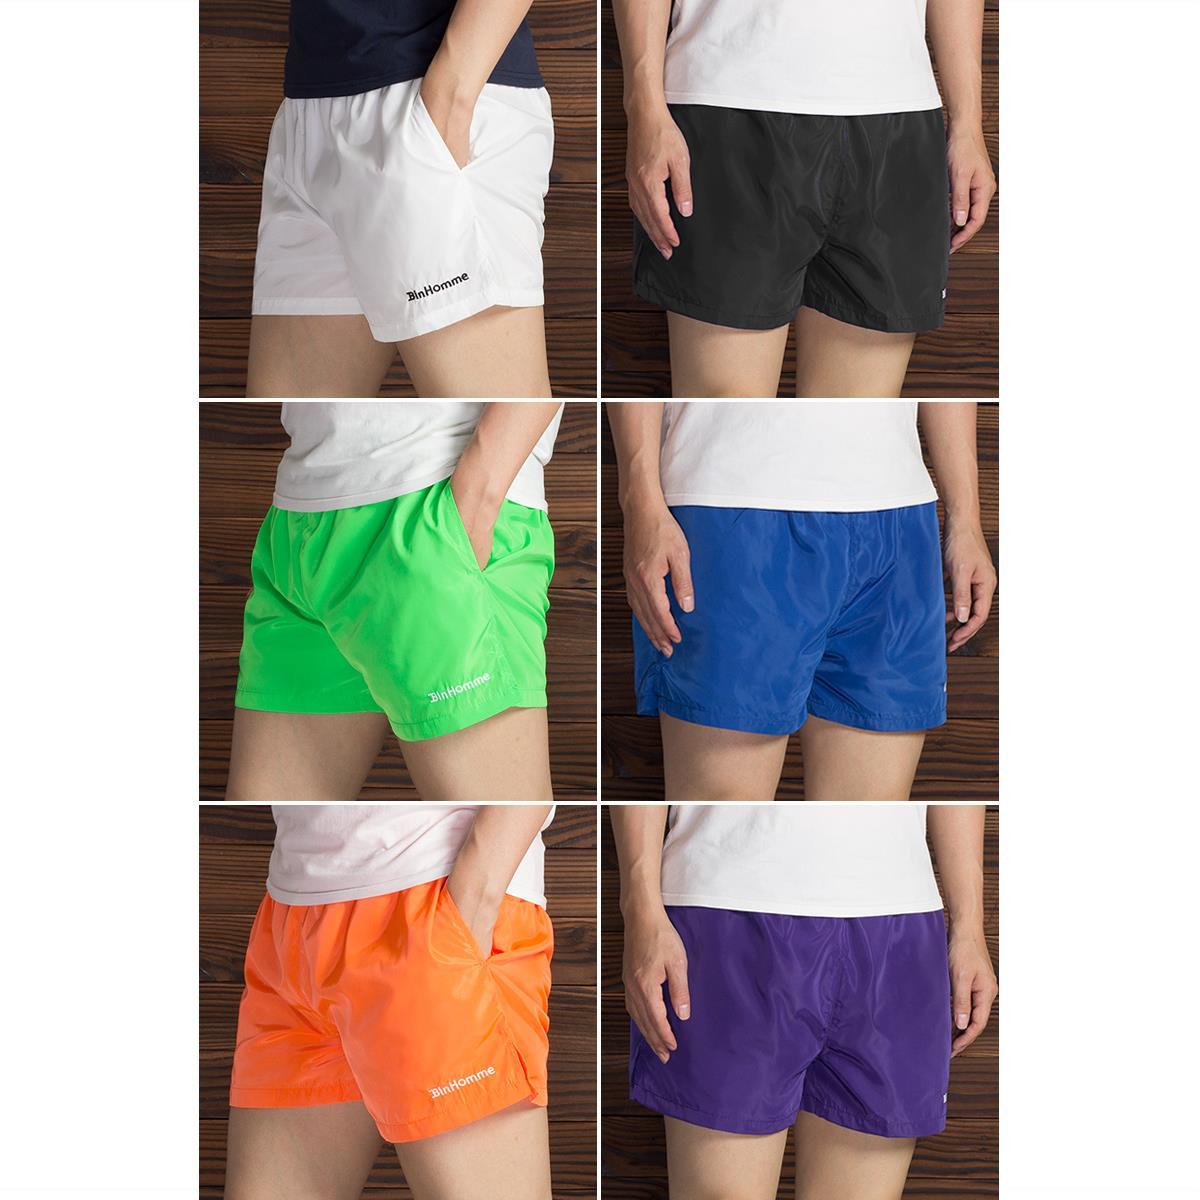 Sports shorts men's summer running big underpants quick drying super shorts beach pants quarter pants 3 pants 3 pants man